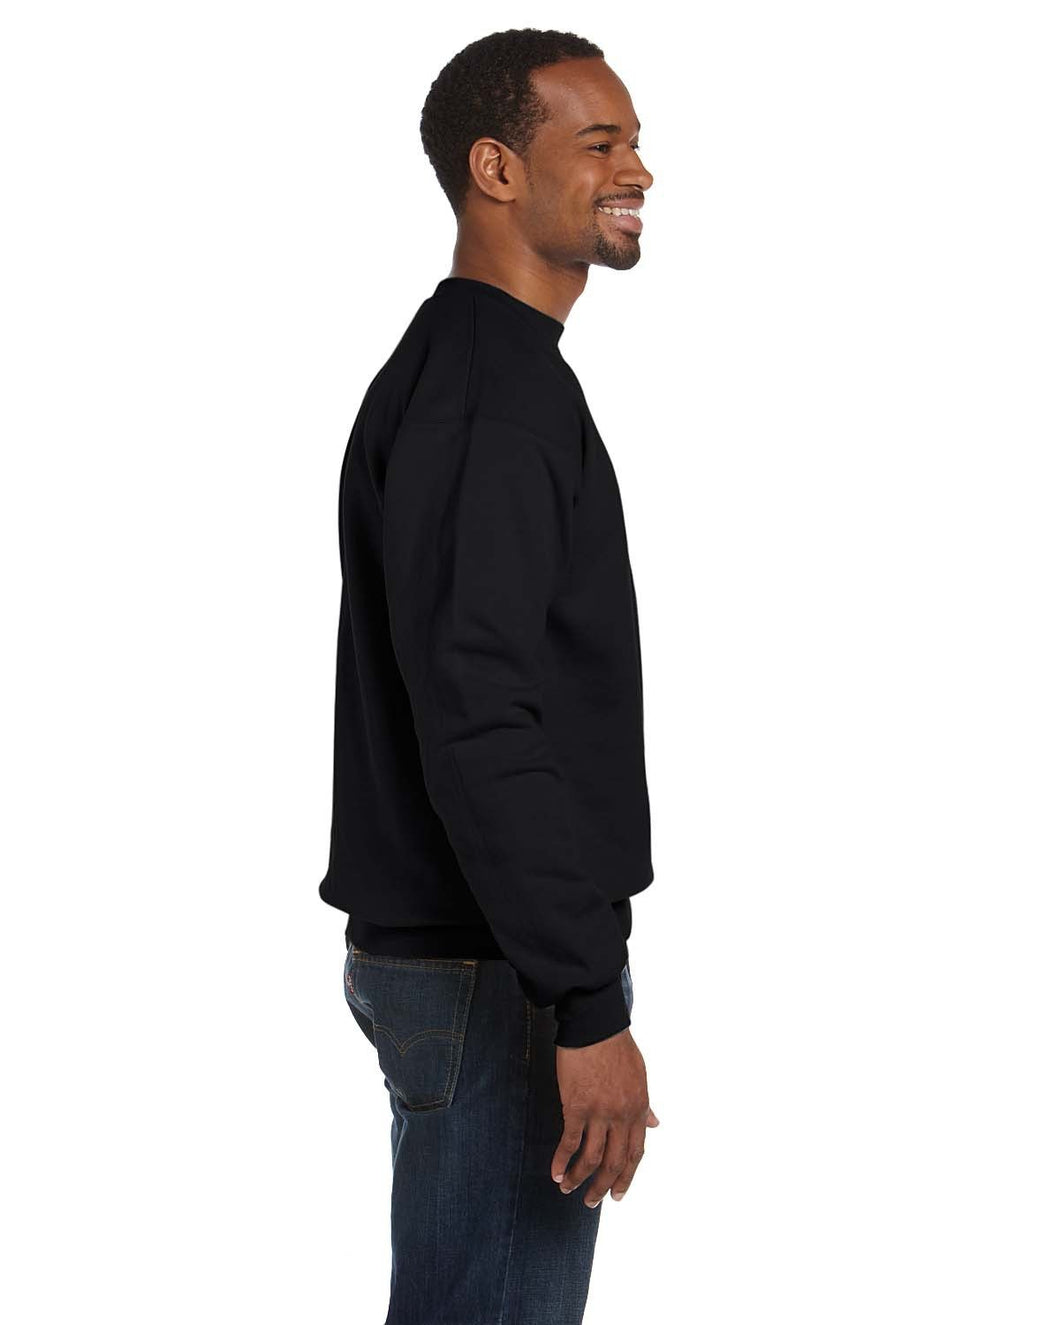 Personalized Black Sweater, 2 week turnaround